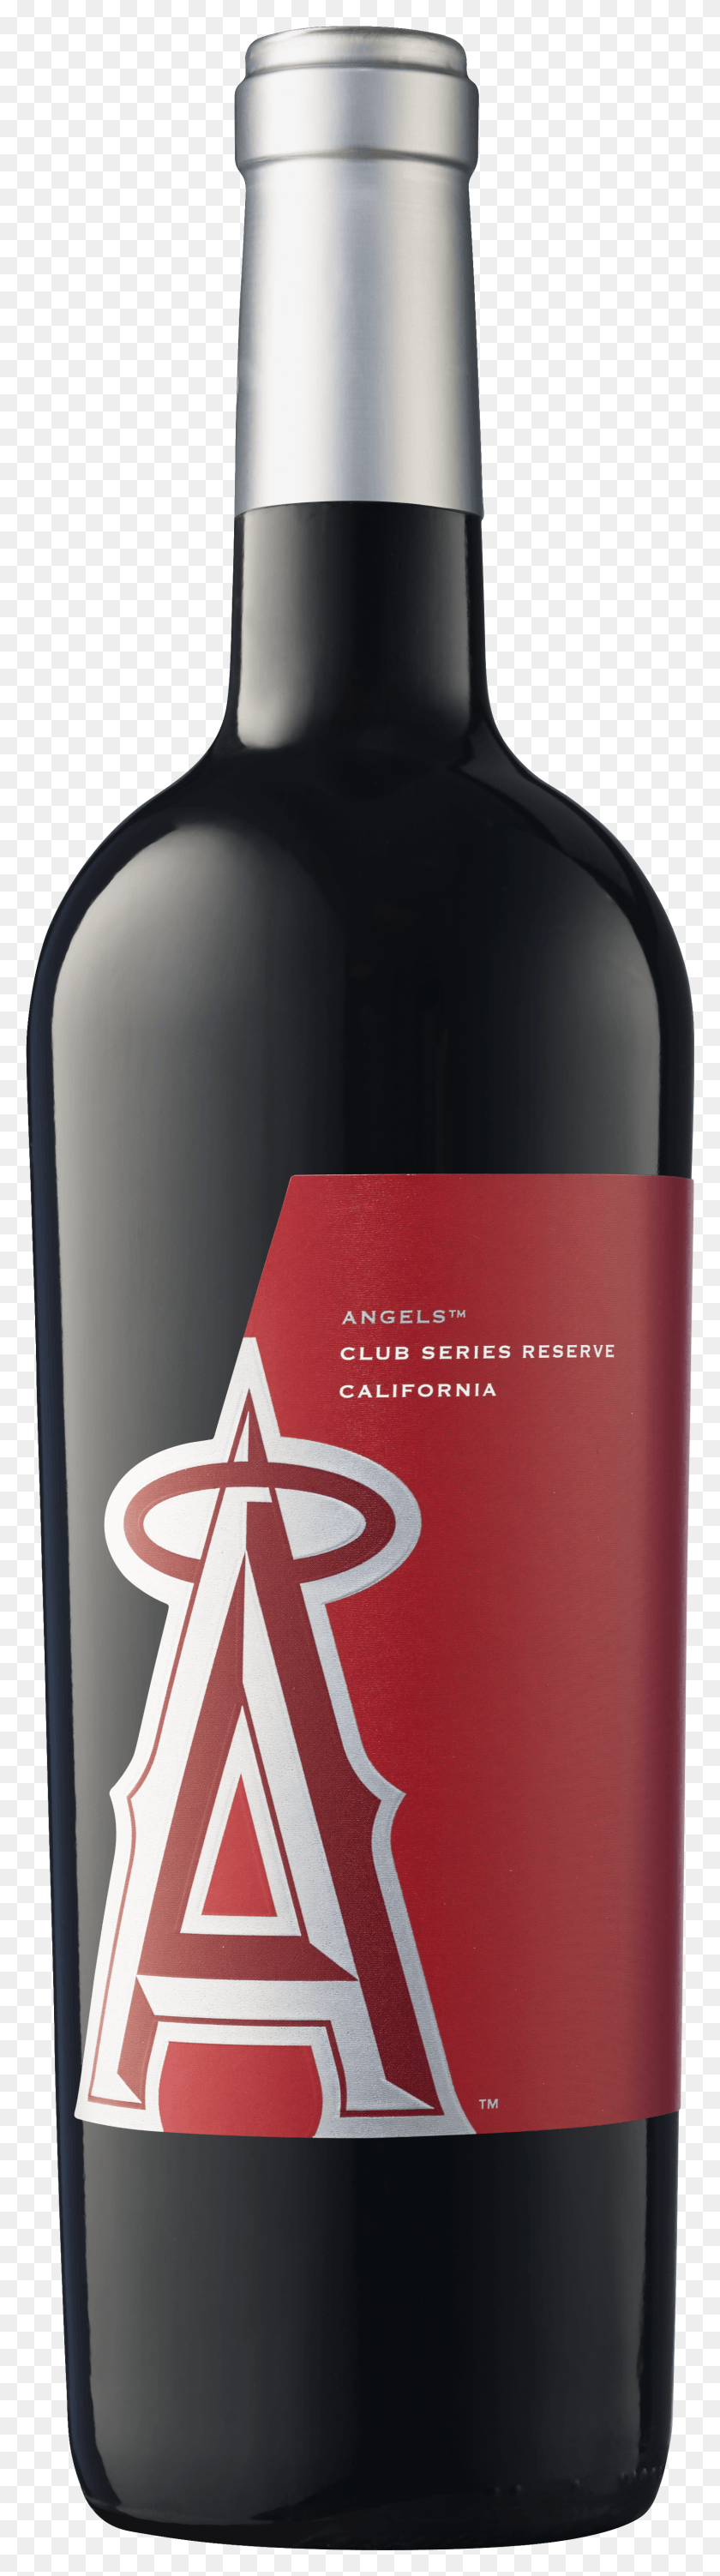 1630x6156 Png Калифорнийское Красное Вино Бутылка Вина Hd Png Скачать